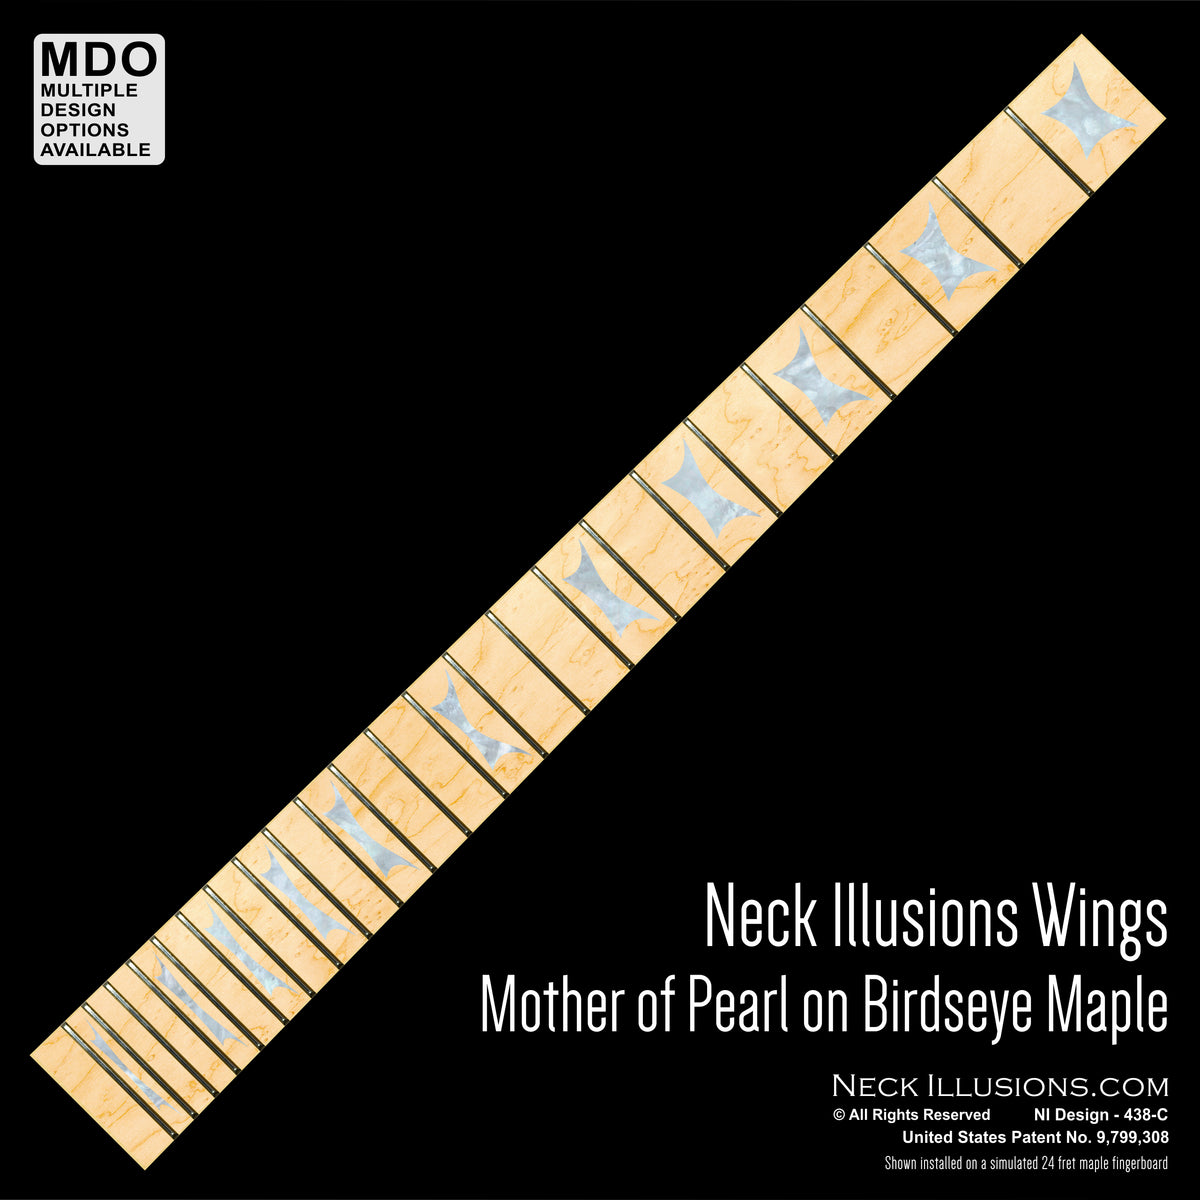 Neck Illusions Wings on Birdseye Maple